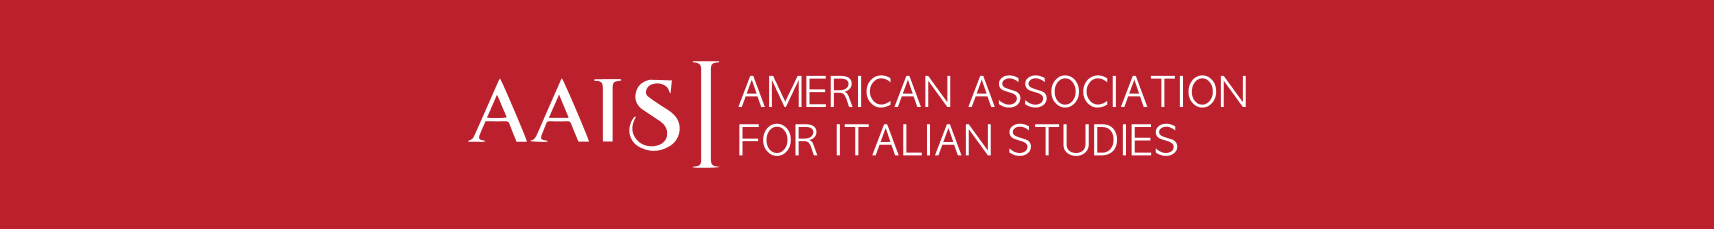 American Association for Italian Studies (AAIS)